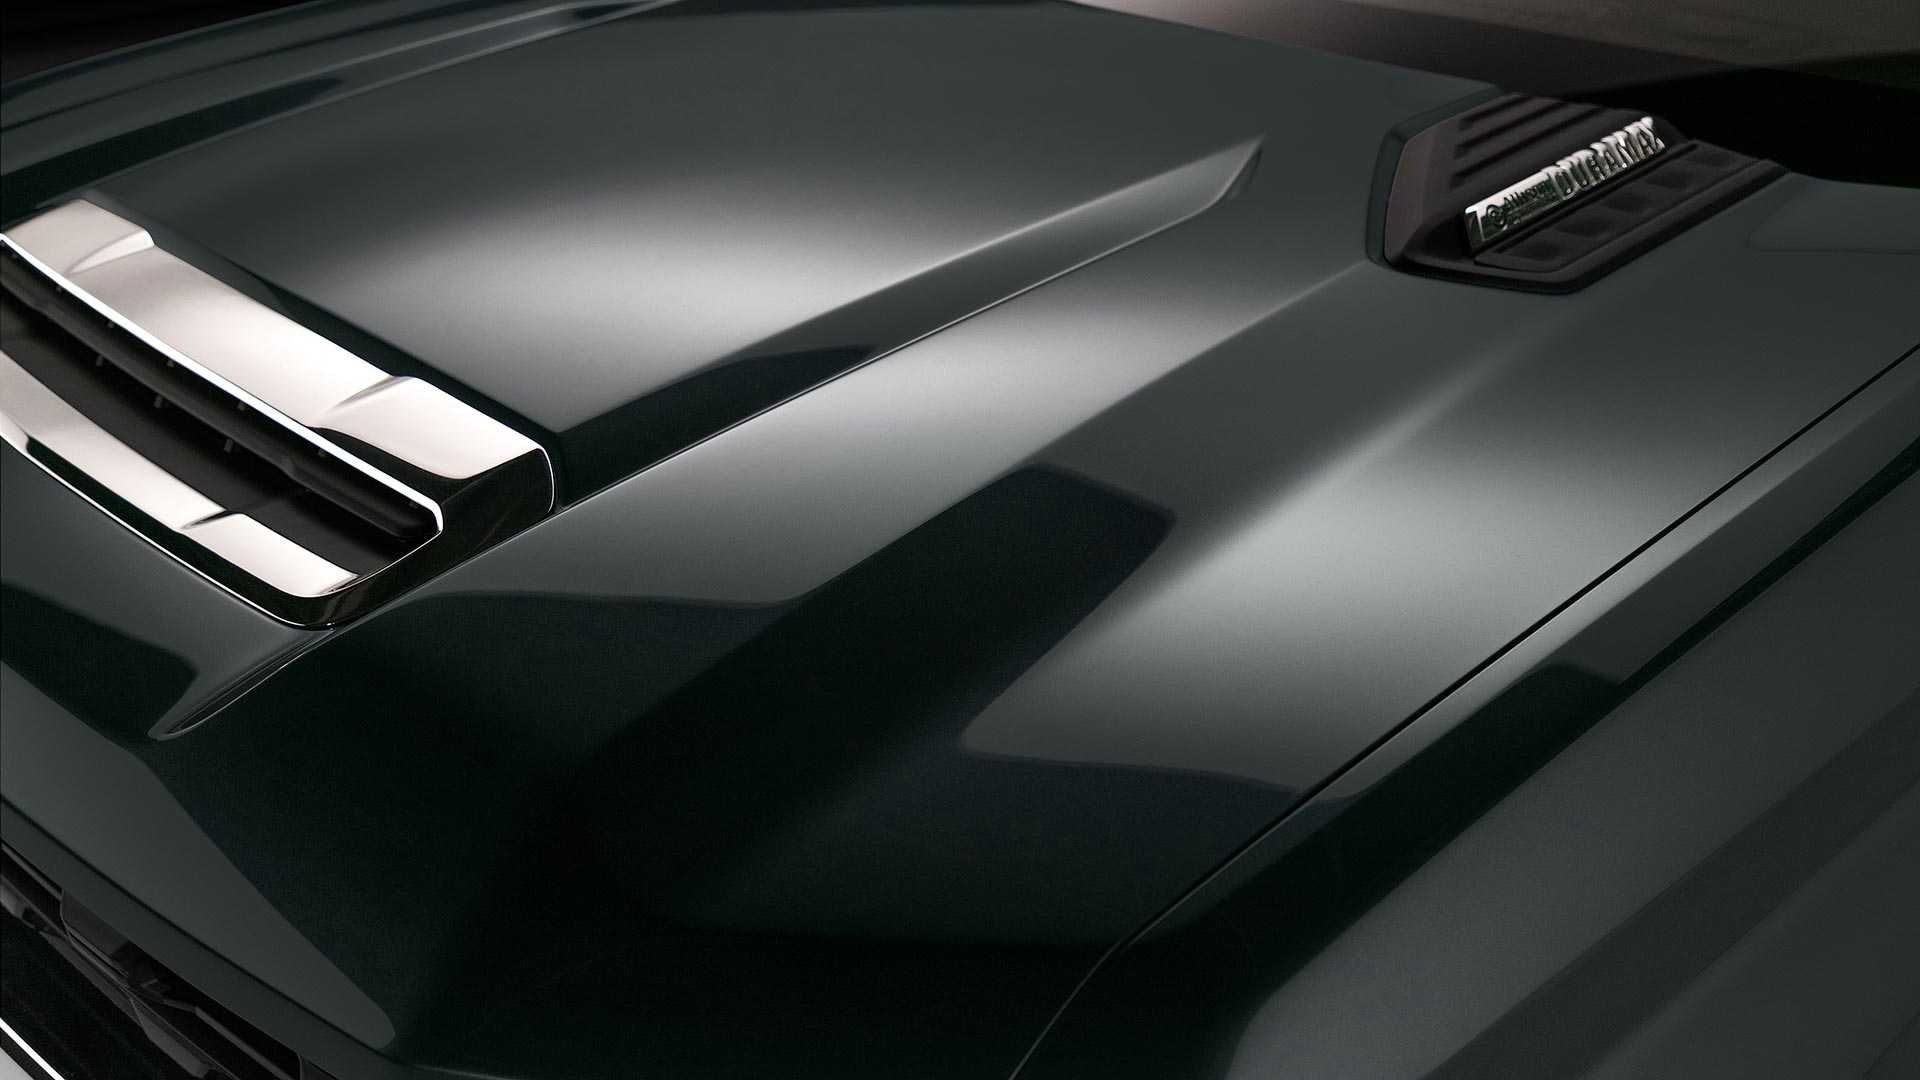 2020 Chevrolet Silverado HD / وانت پیکاپ شورولت سیلورادو HD مدل 2020